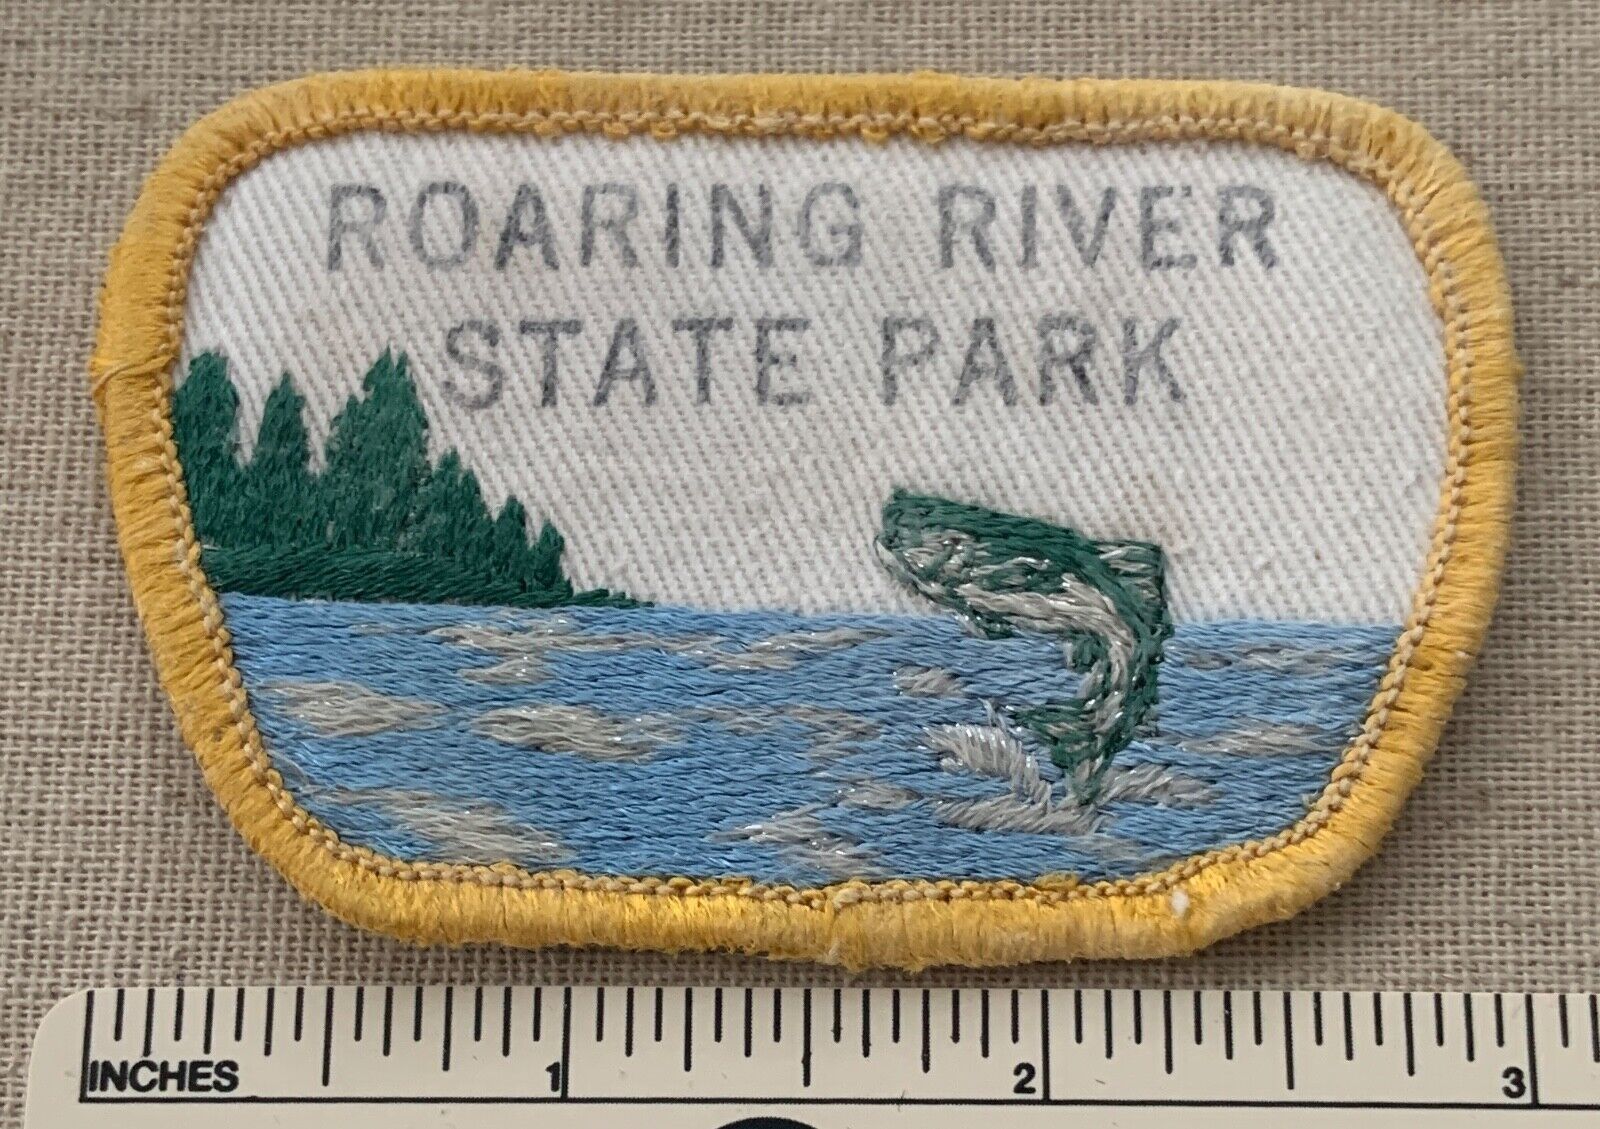 Vintage ROATING RIVER STATE PARK Travel Souvenir PATCH Fishing Boating Camp Hike